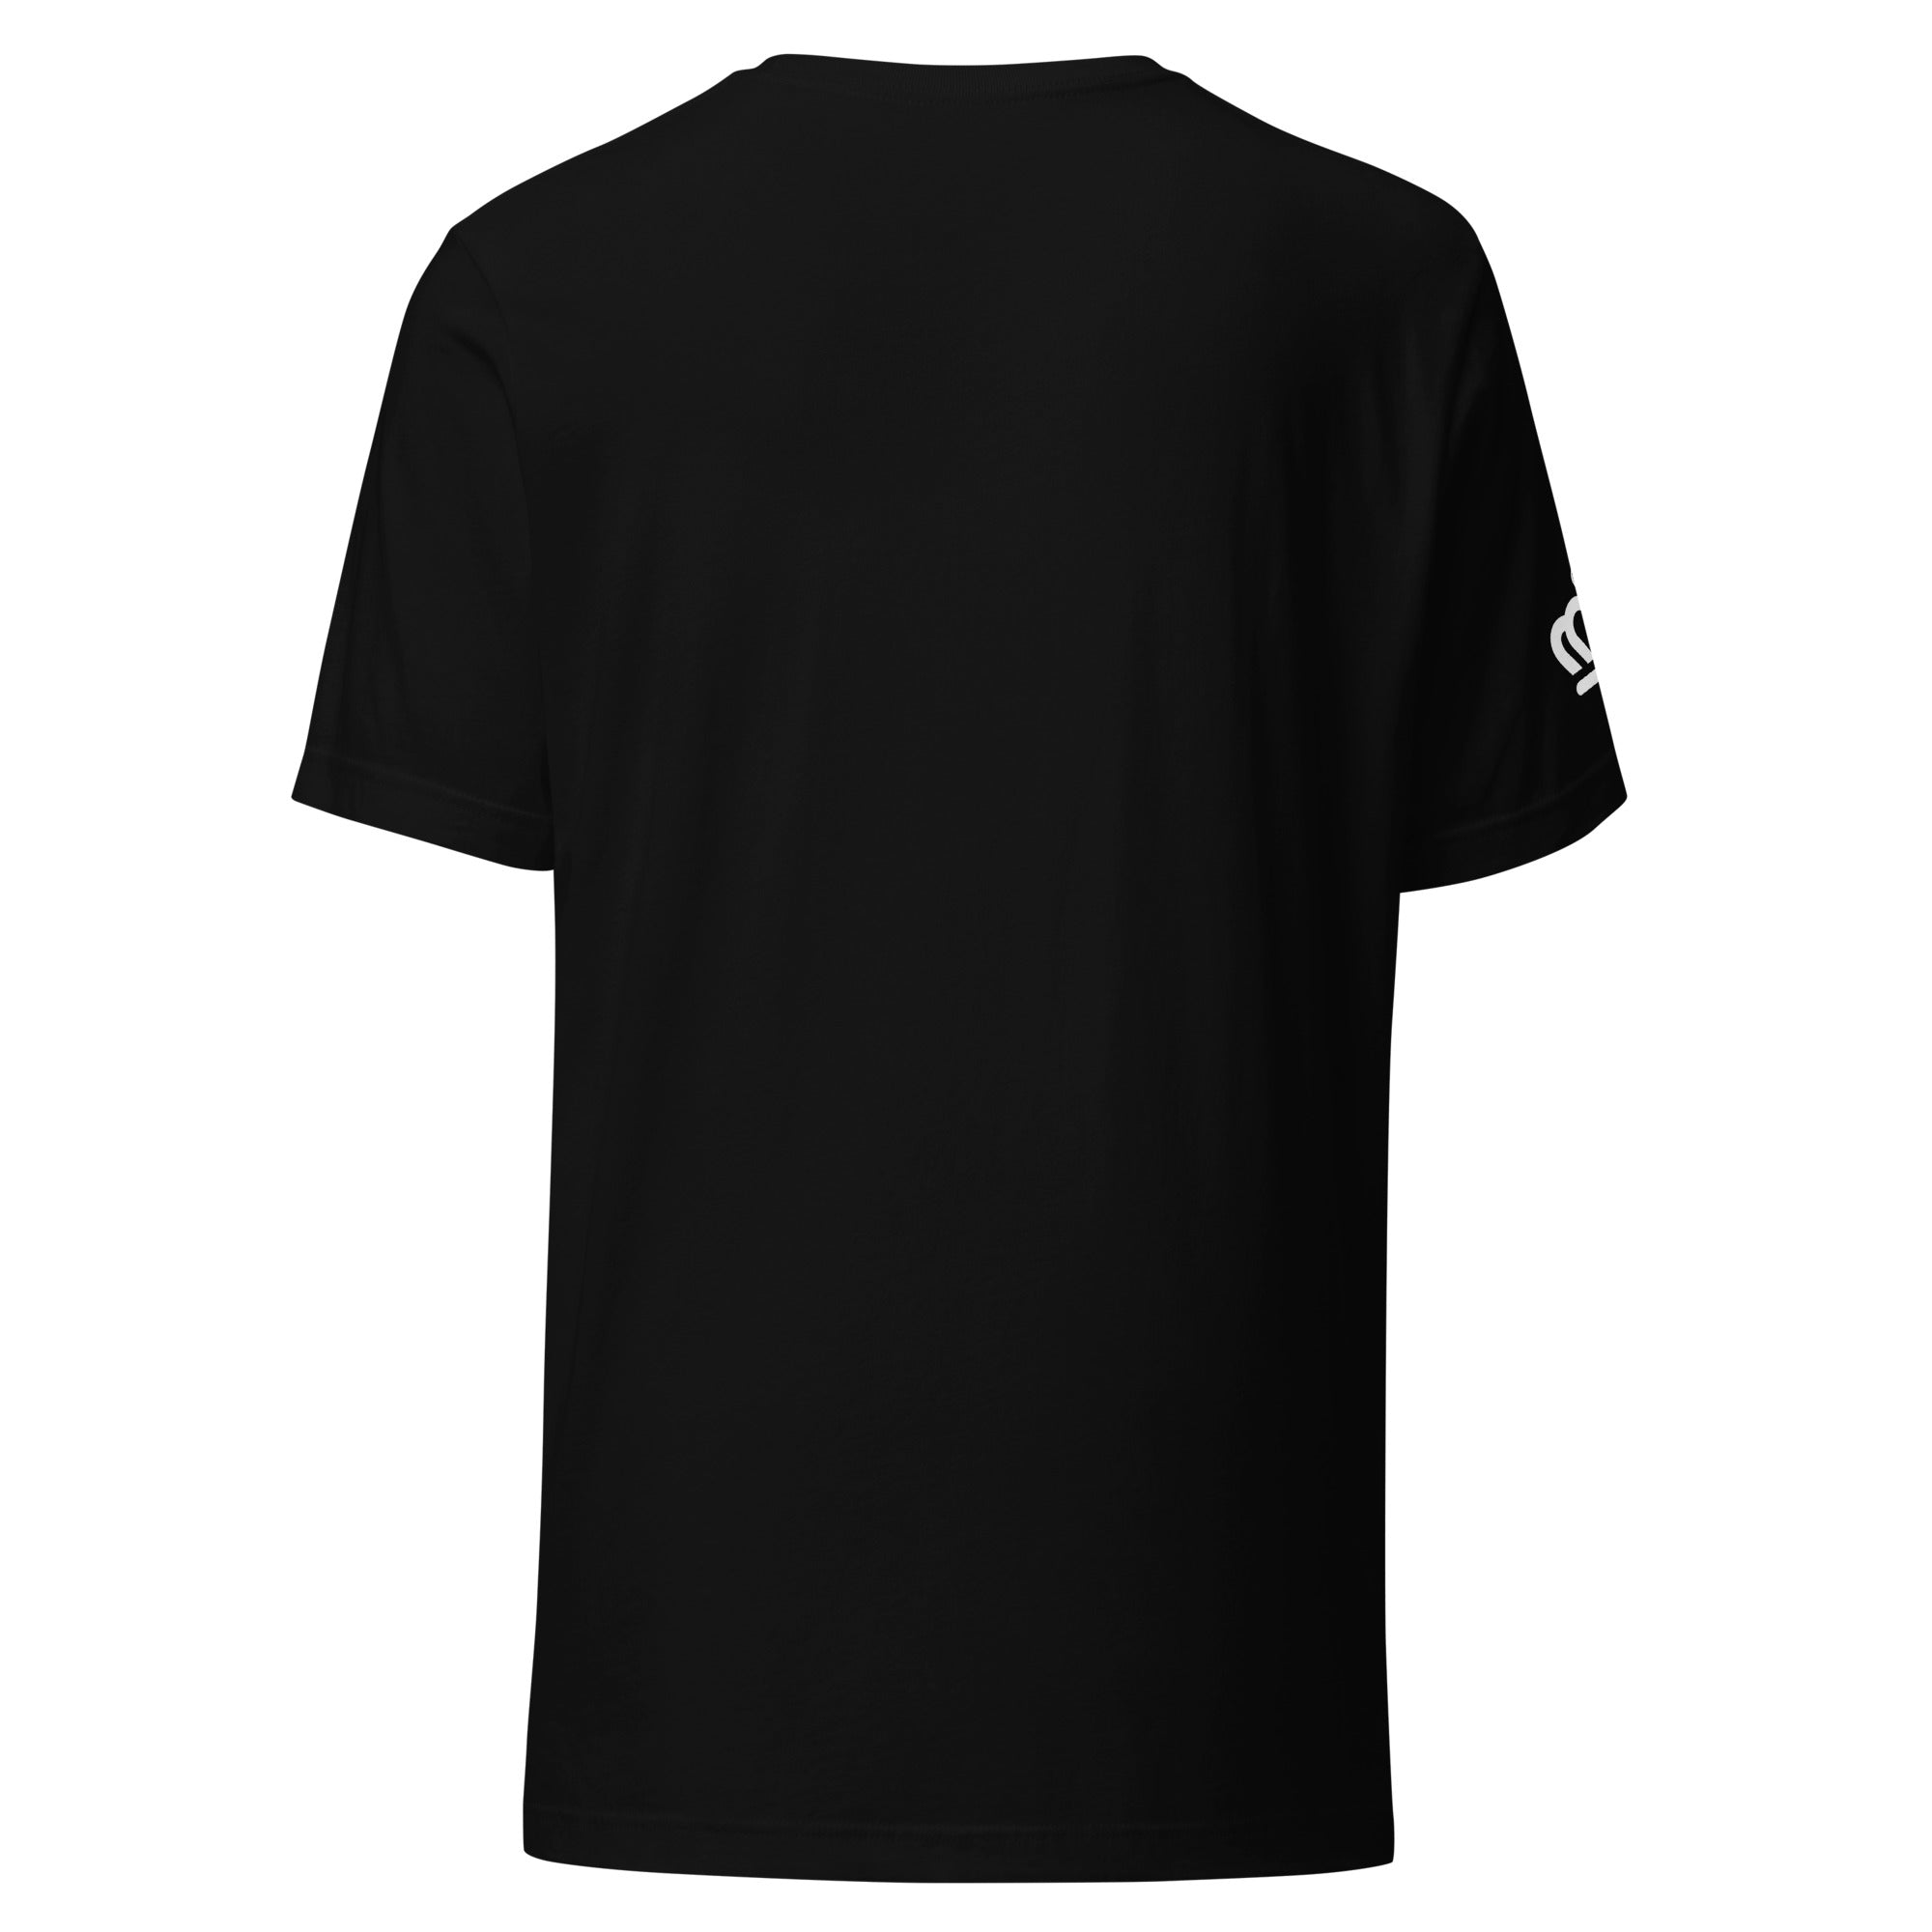 THE ROYAL : Unisex t-shirt